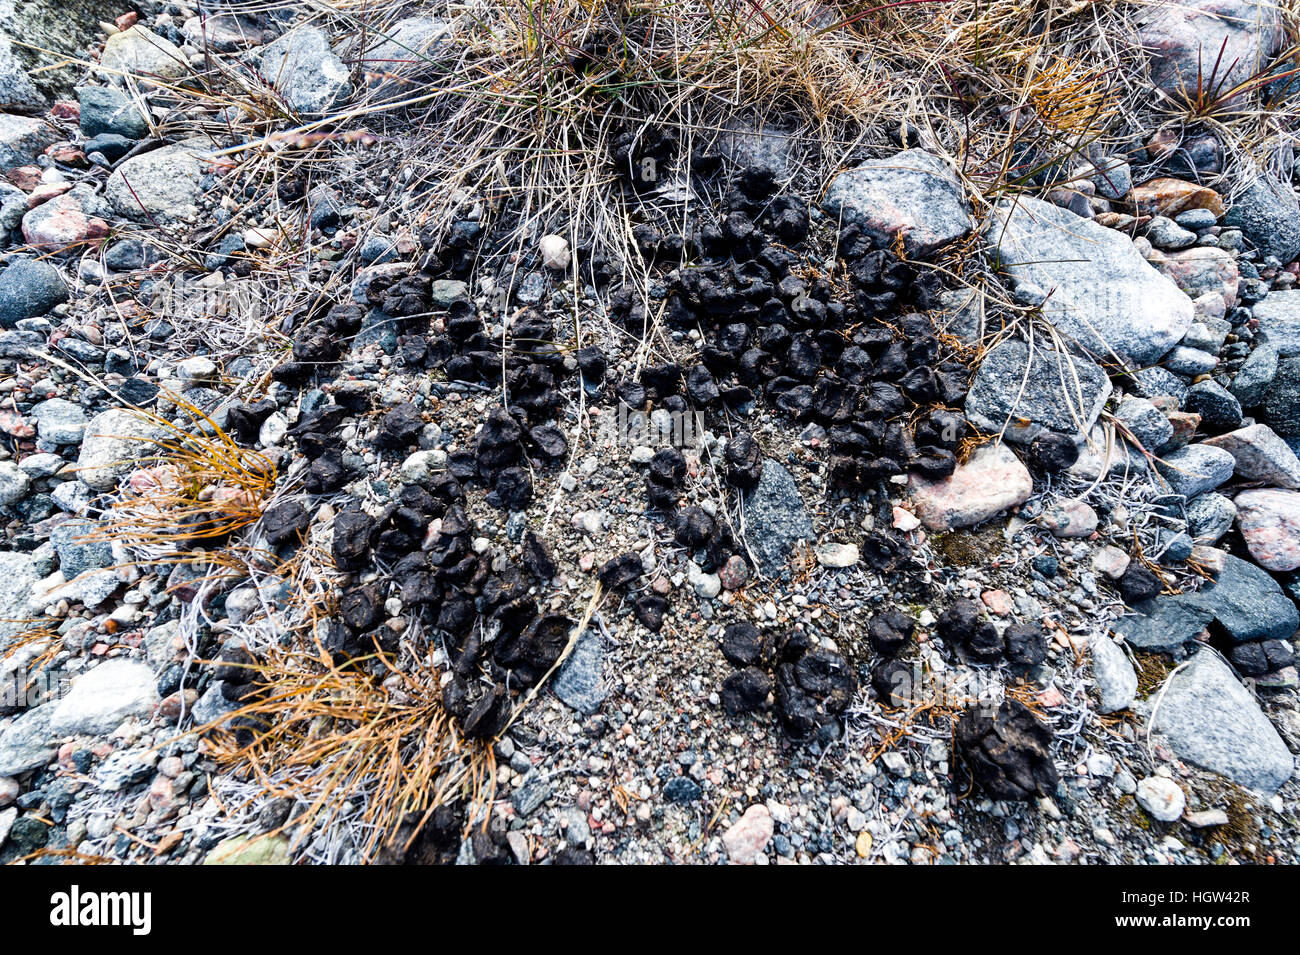 A pile of Barren-ground Caribou faeces pellets fertilize the barren ground. Stock Photo